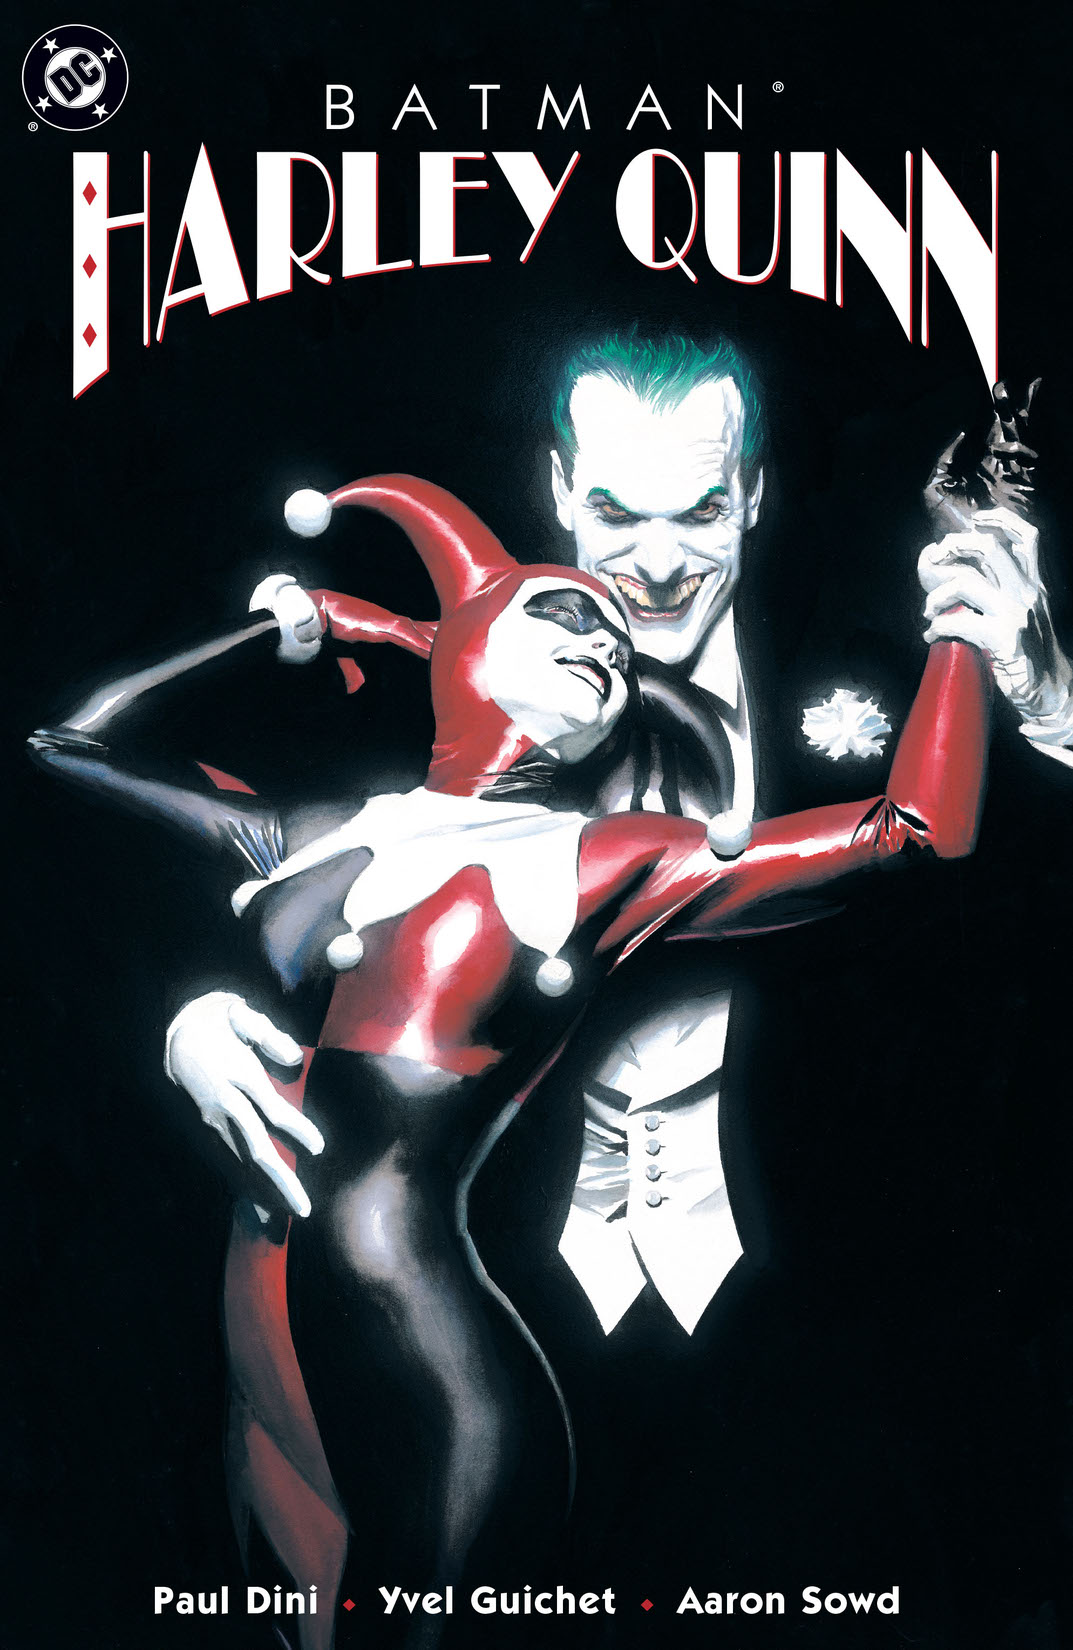 Batman: Harley Quinn #1 preview images